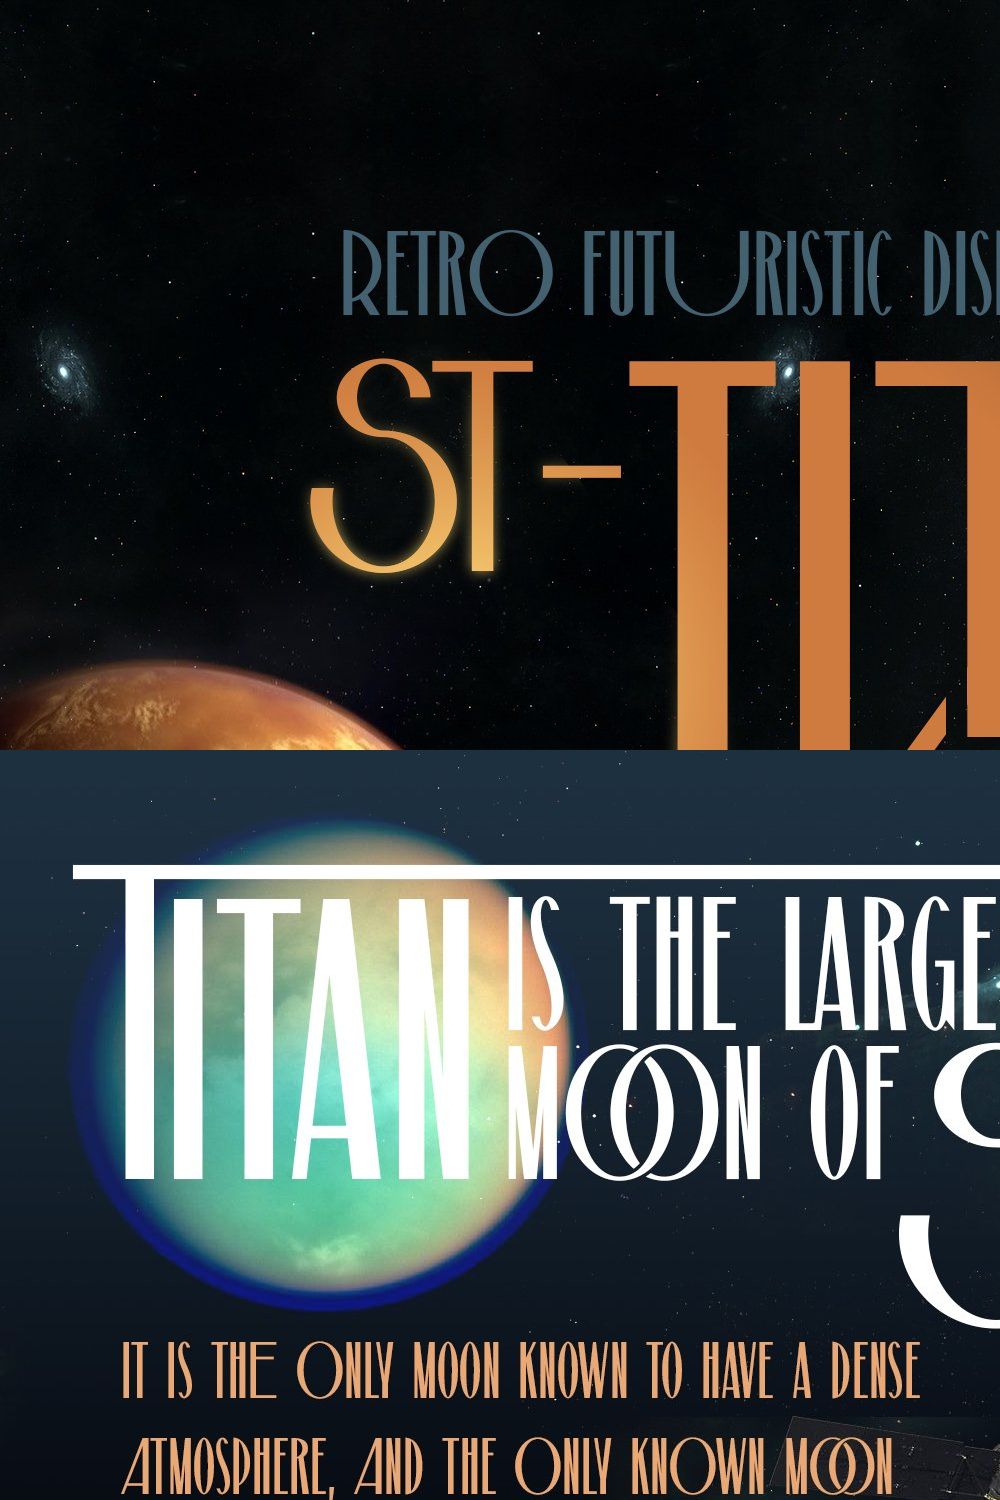 ST-Titan retro futuristic font pinterest preview image.